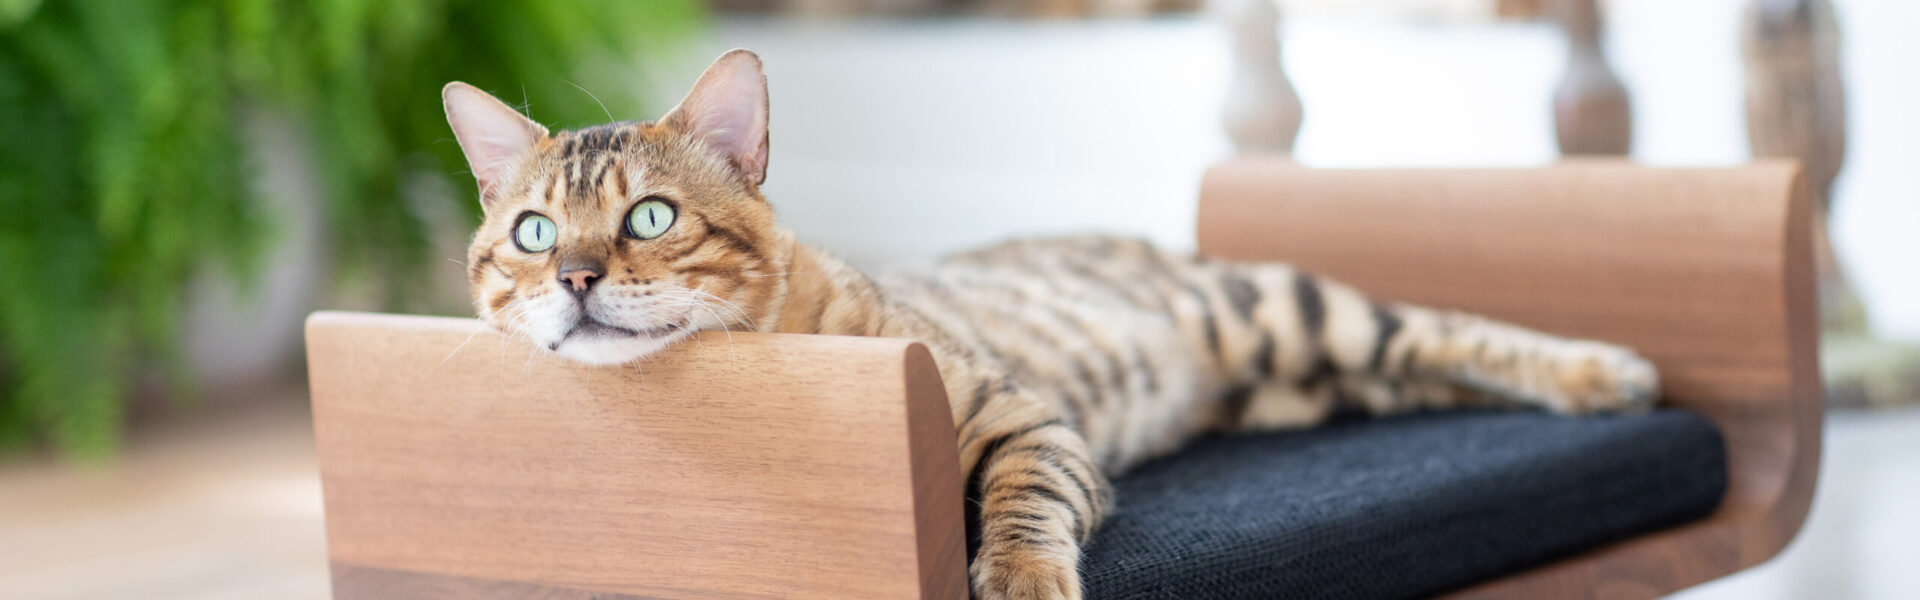 CAT'S BEST ÖkoPlus - cat litter - Theodor Backs GmbH